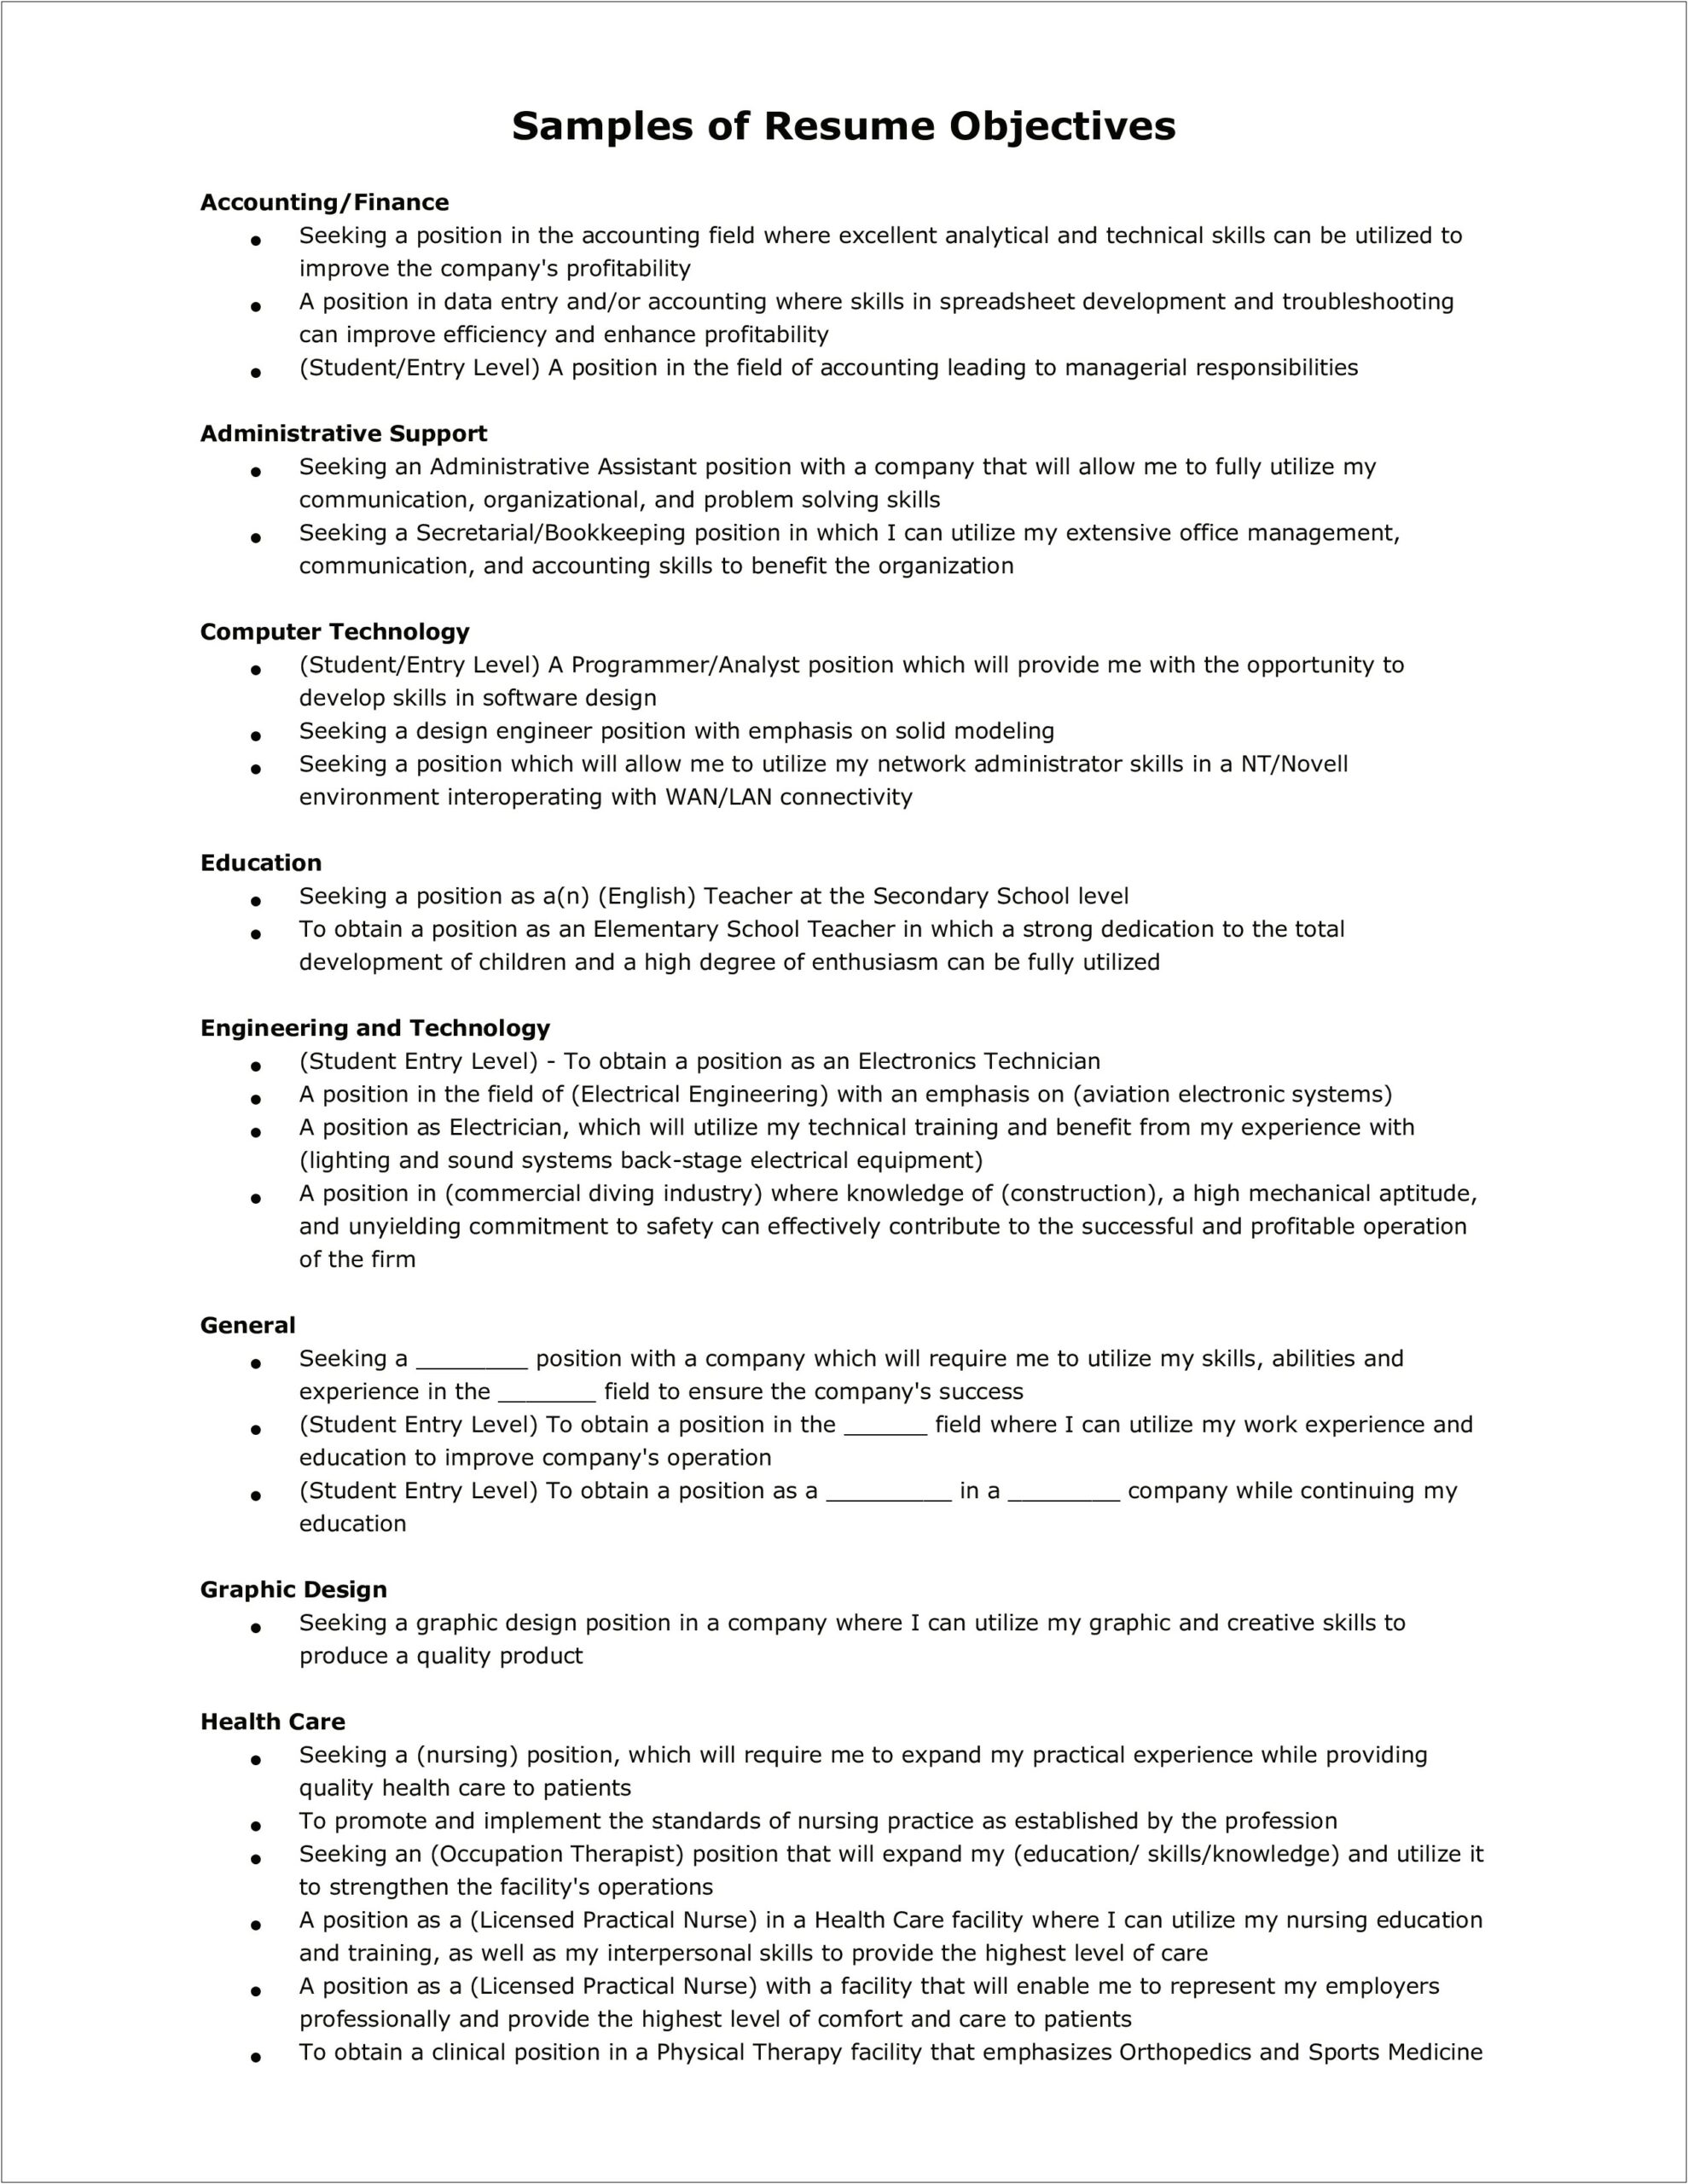 Resume Objectives Based On Education